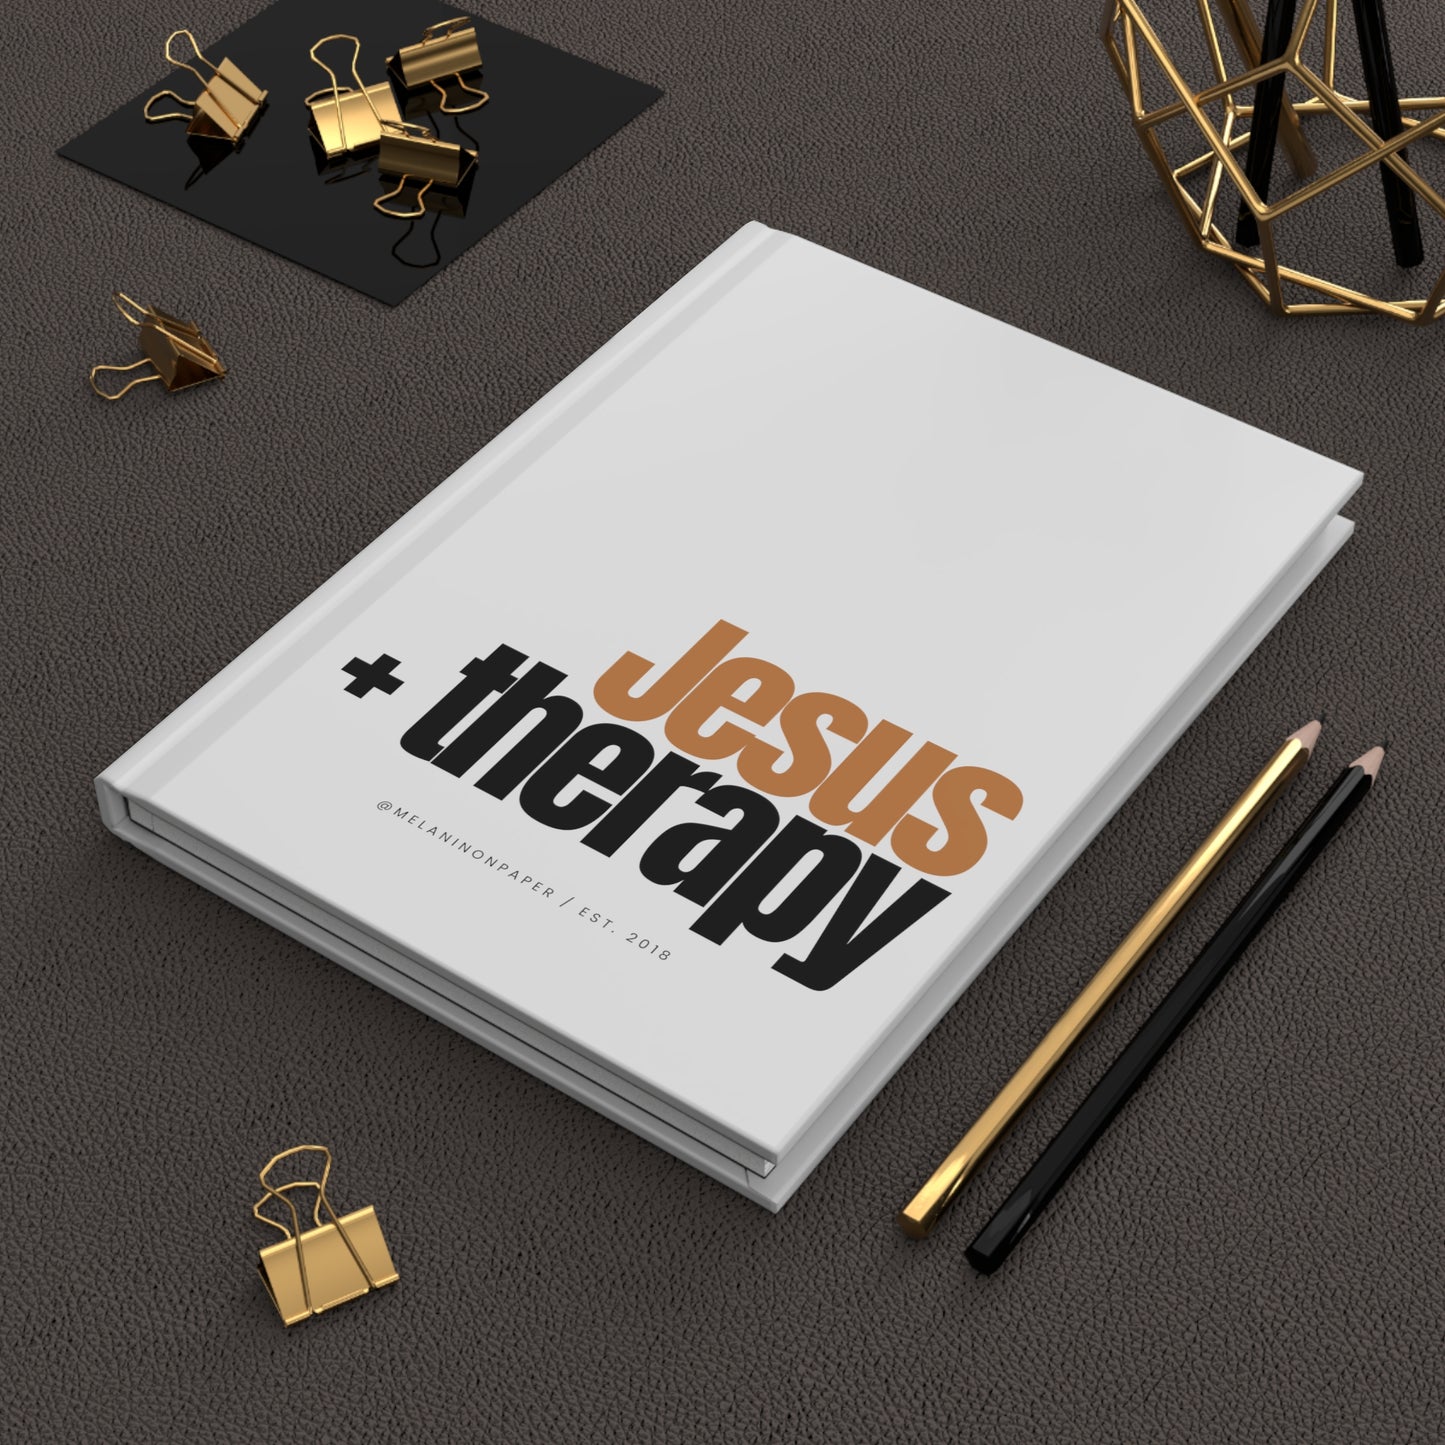 "Jesus + therapy" Velvety Matte Hardcover Journal (white)